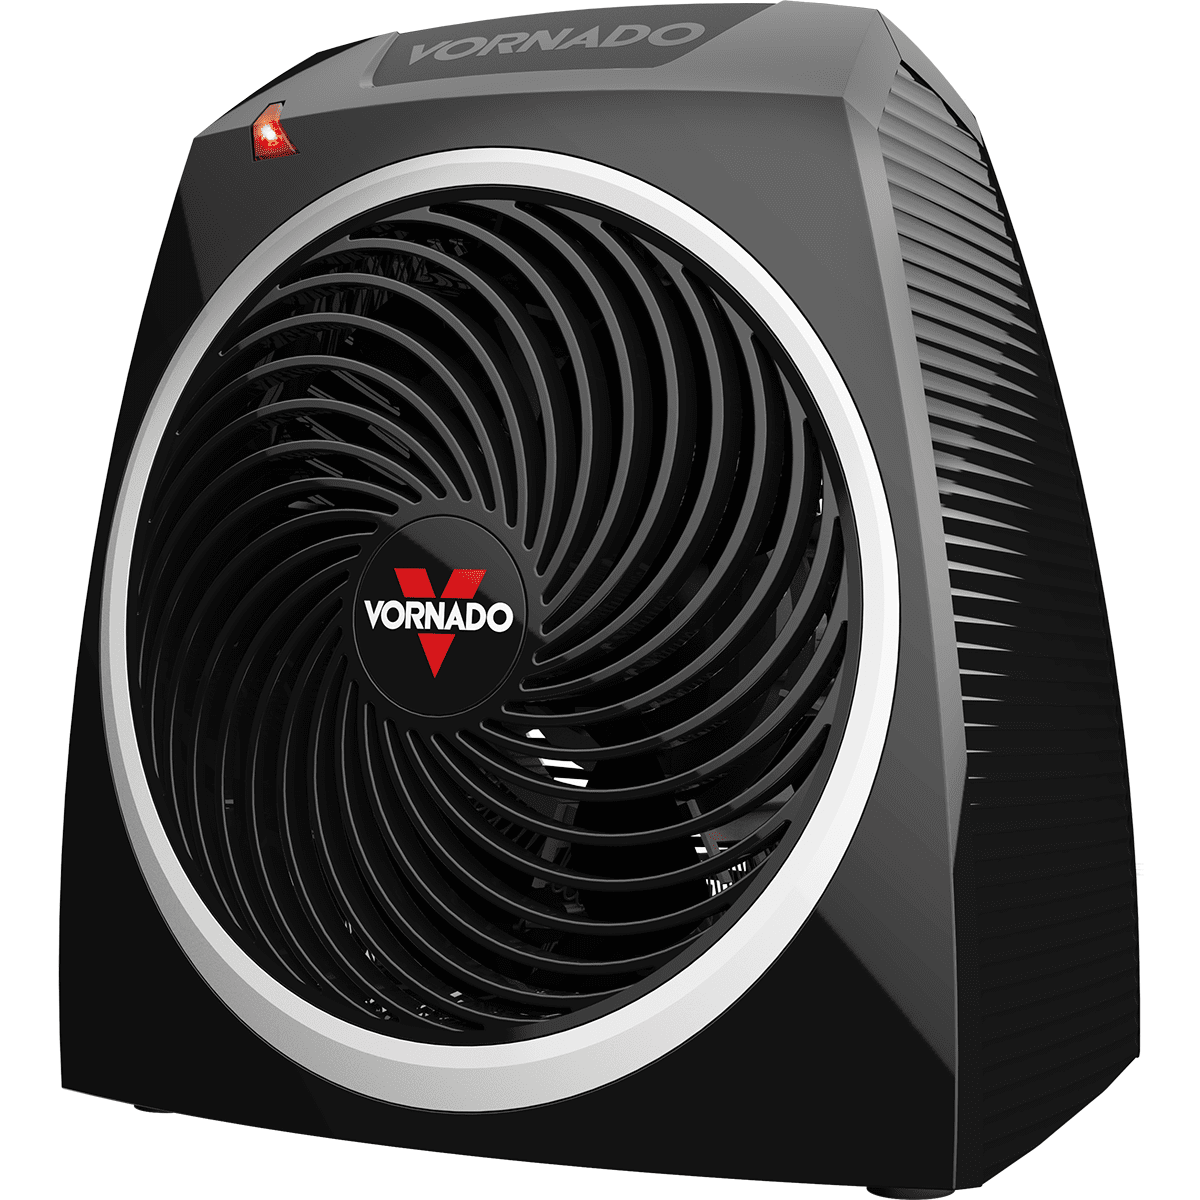 Vornado Vh5 Personal Heater